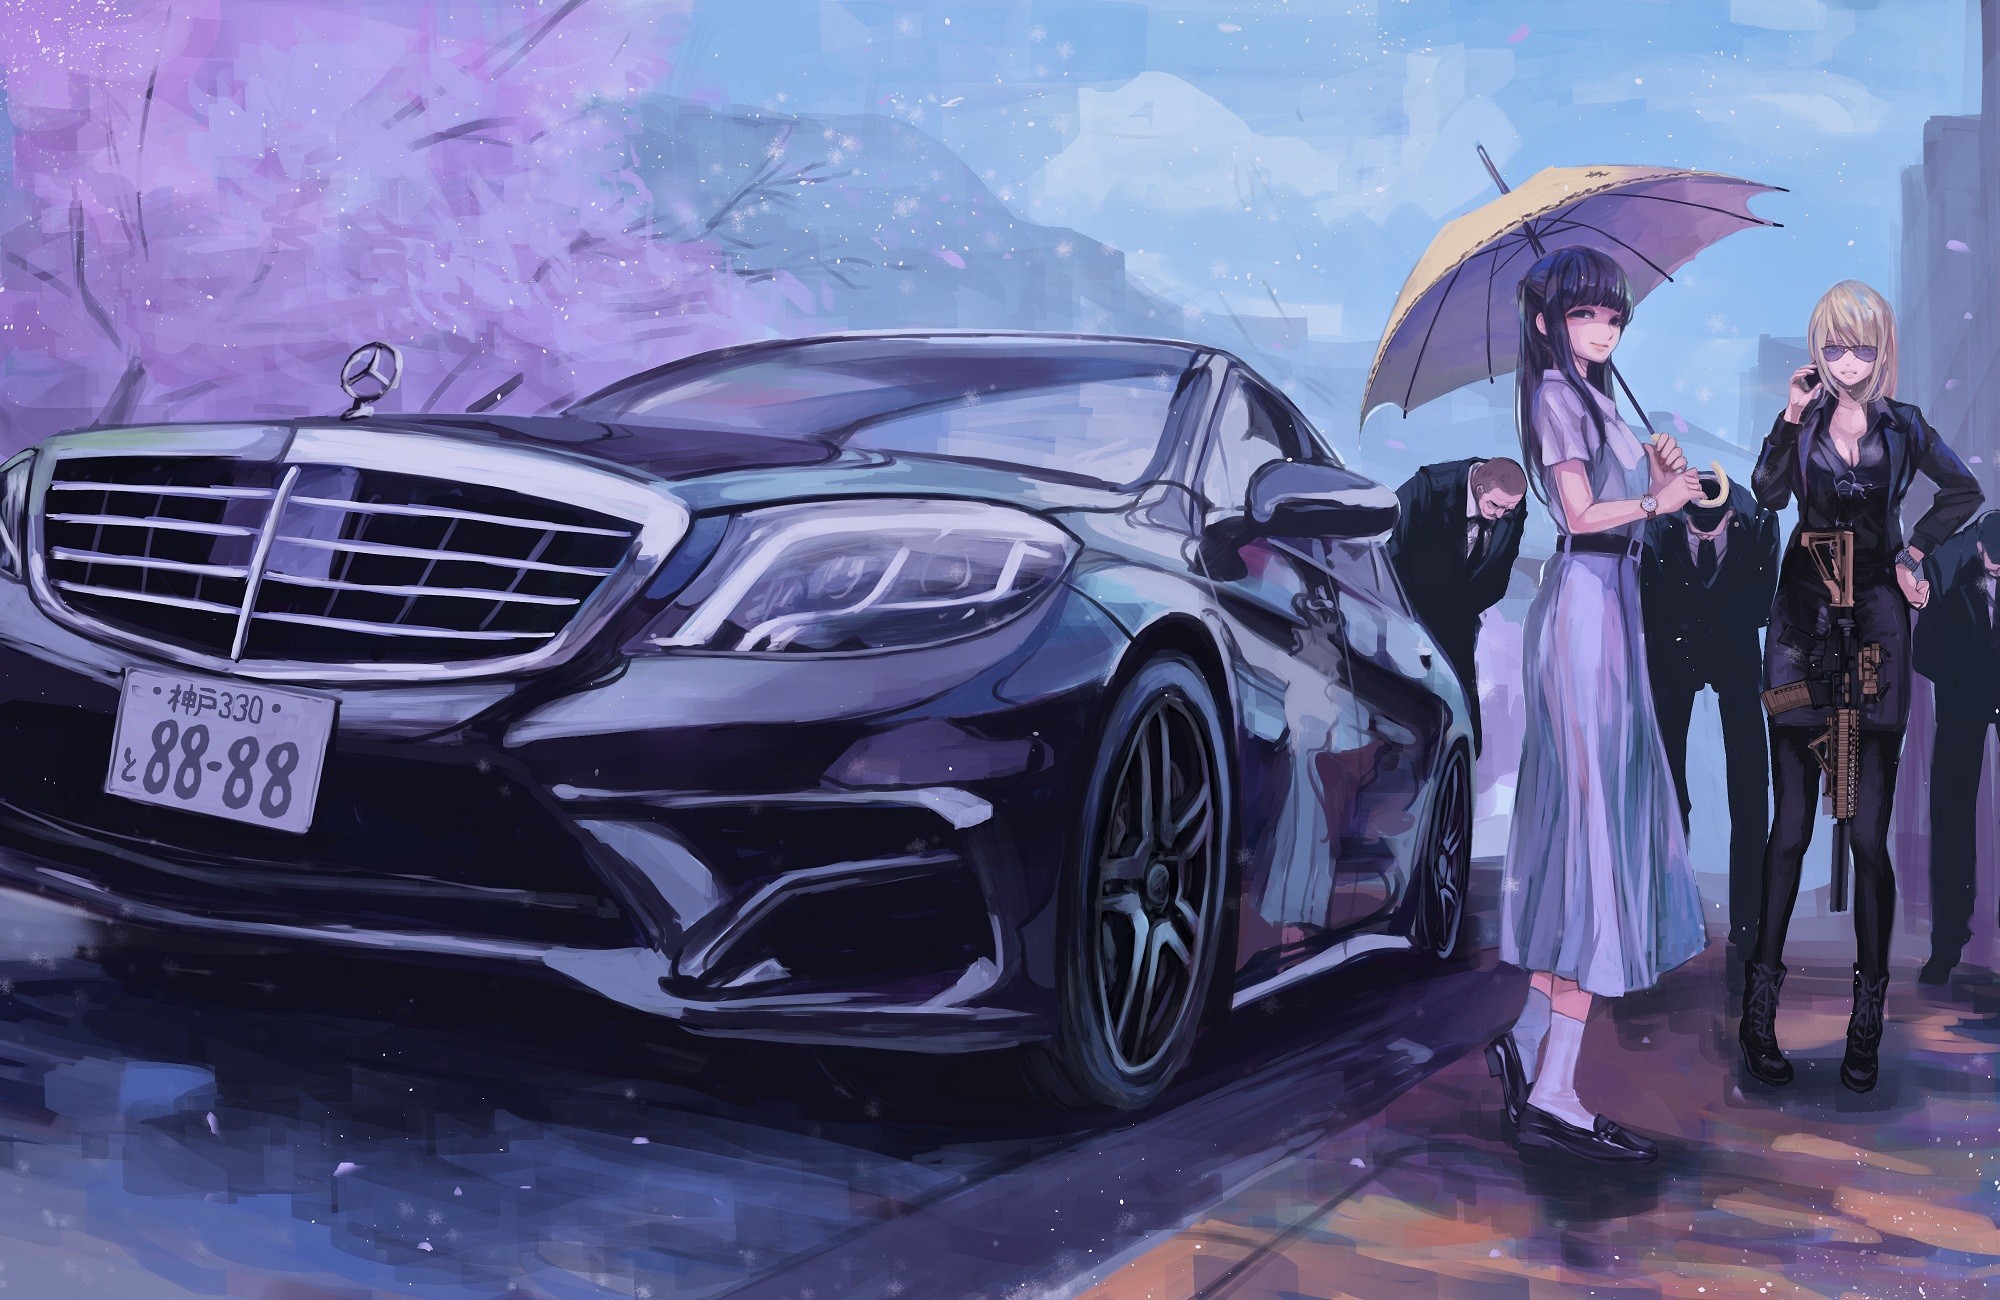 Anime 2000x1300 Mercedes-Benz dress original characters cherry blossom umbrella women with cars car vehicle women with umbrella machine gun weapon girls with guns black cars